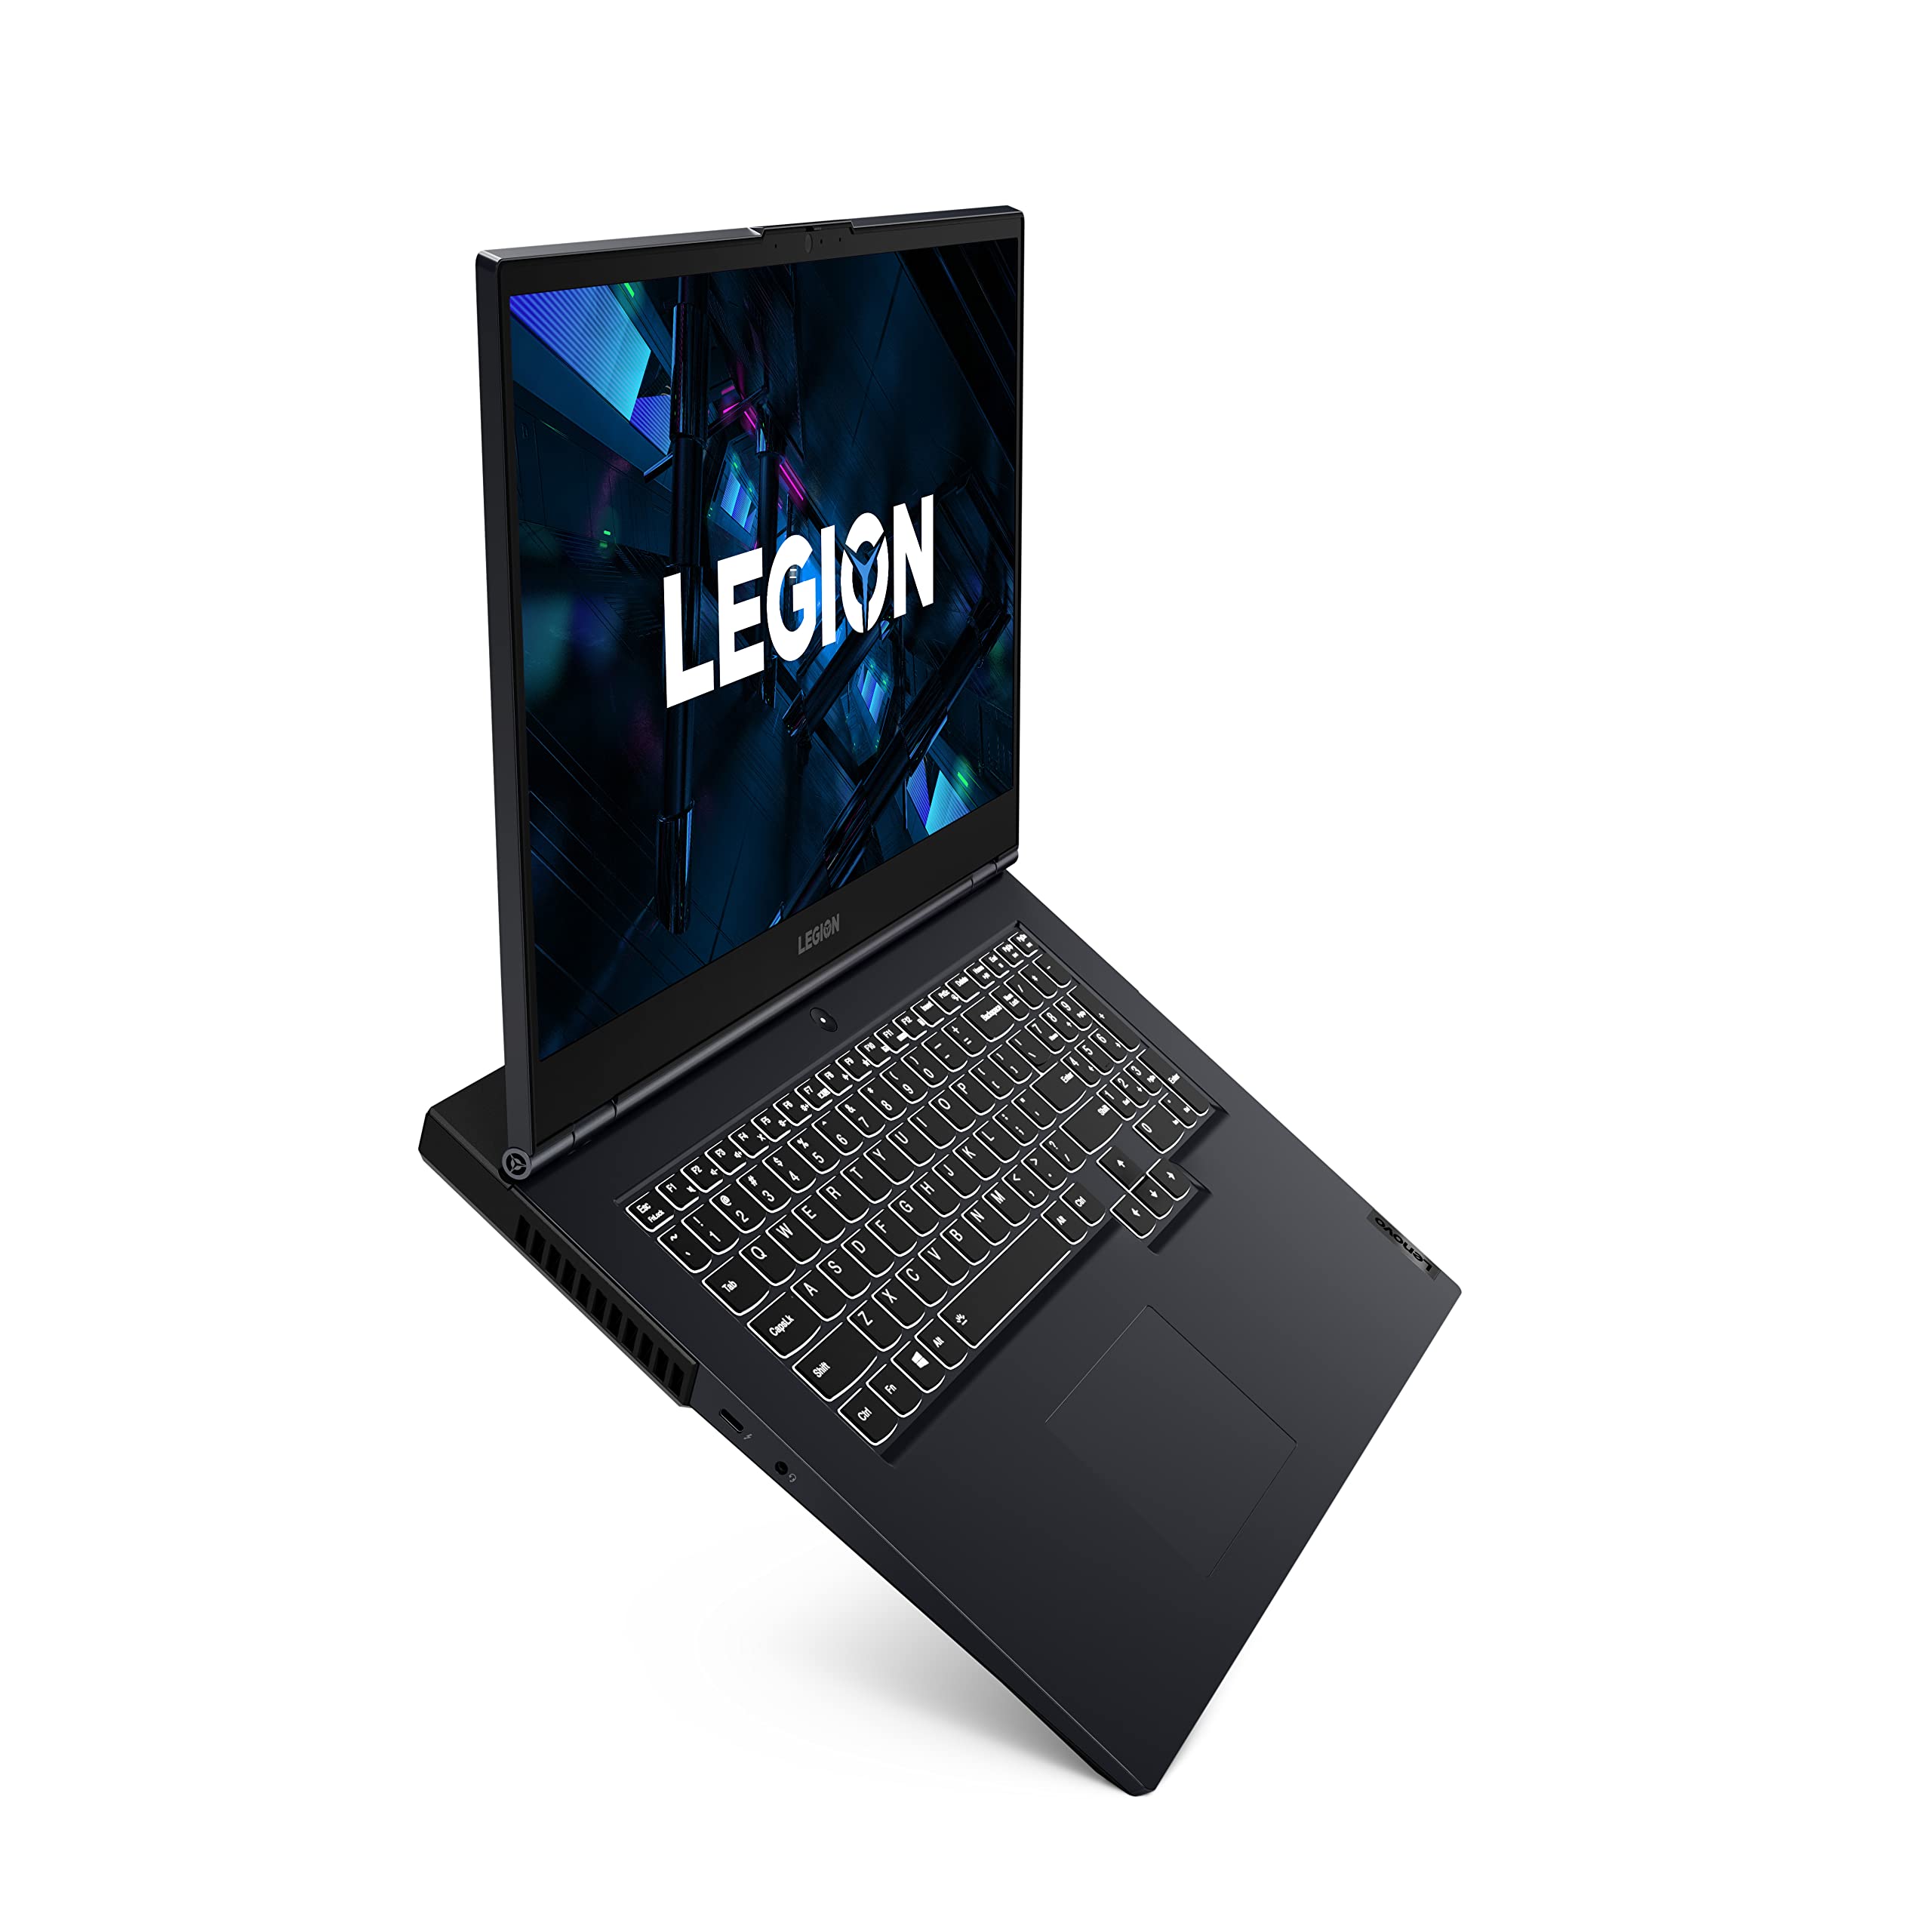 Lenovo - Legion 5i - Gaming Laptop - Intel Core i7-11800H - 8GB DDR4 RAM - 1TB NVMe TLC SSD - NVIDIA GeForce RTX 3050 Ti Graphics - 17.3